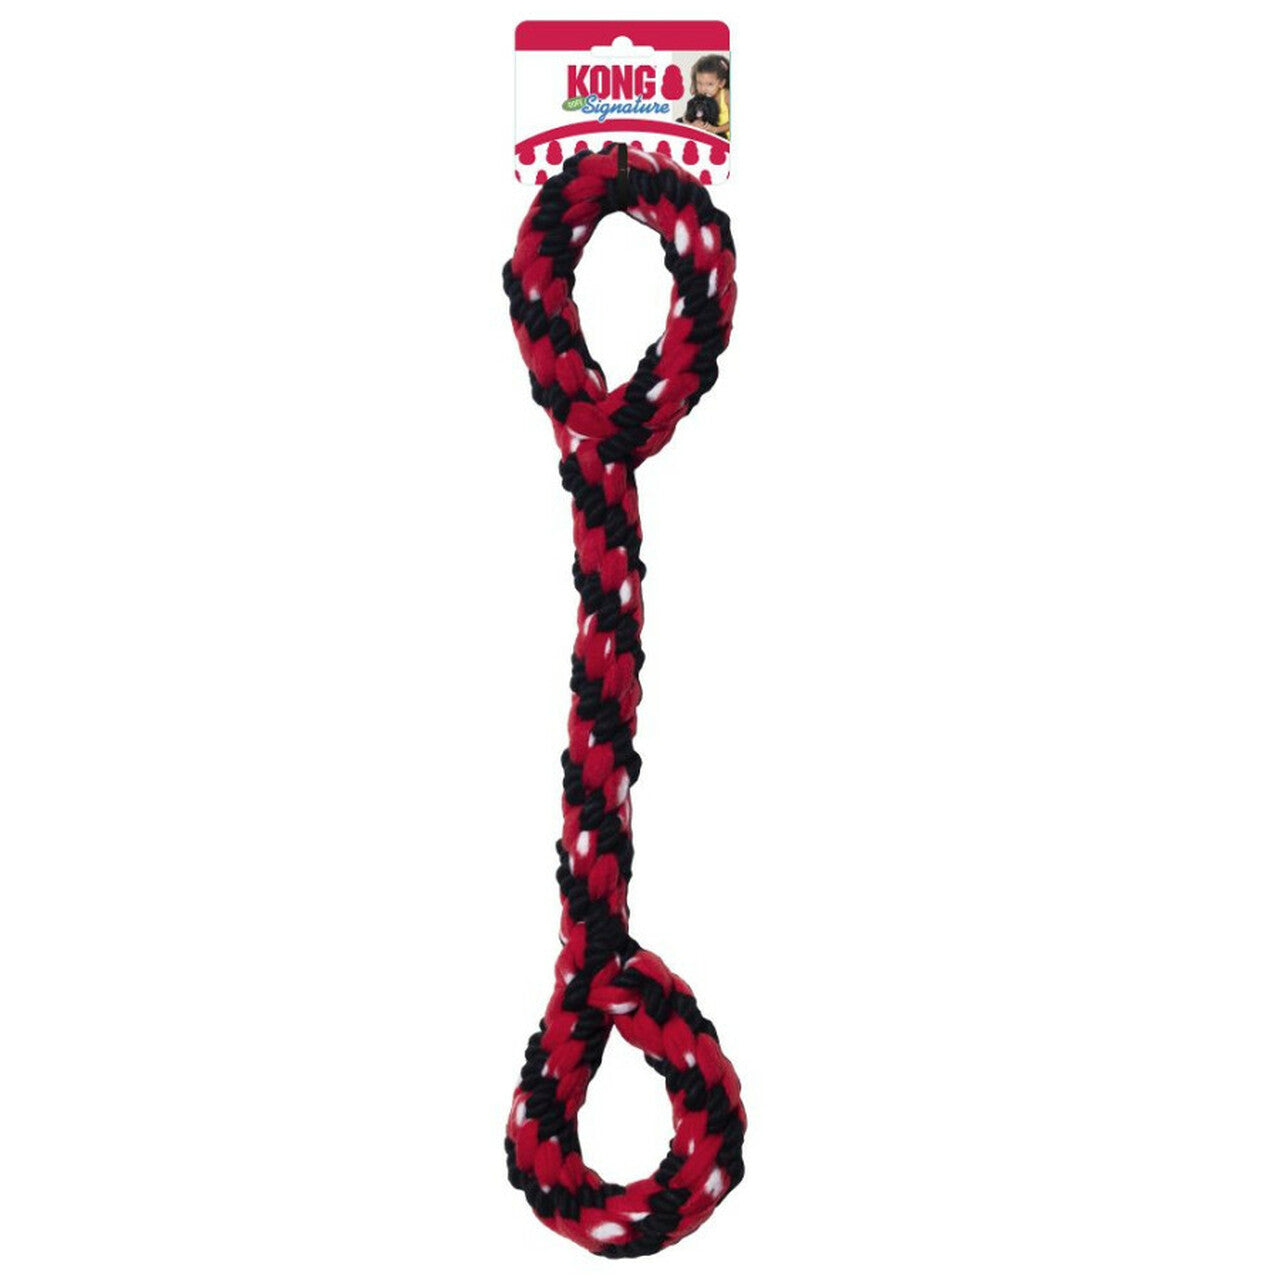 Double Rope Tug Dog Toy, 22 inch